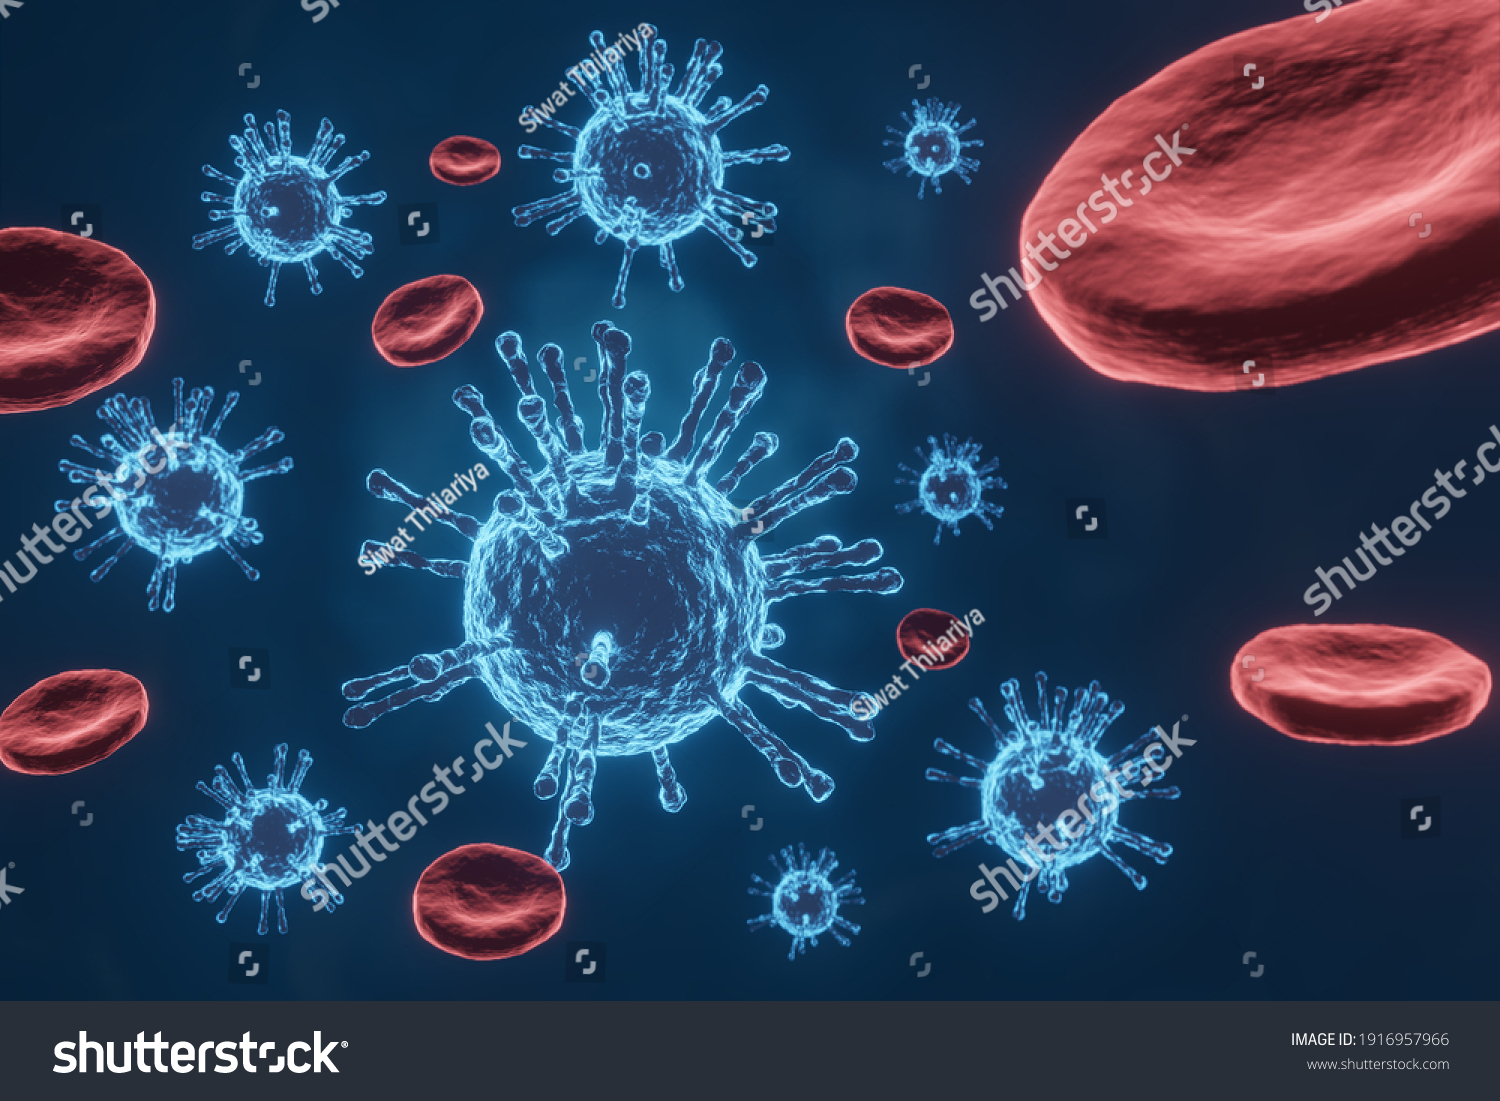 Virus_research Images, Stock Photos & Vectors | Shutterstock